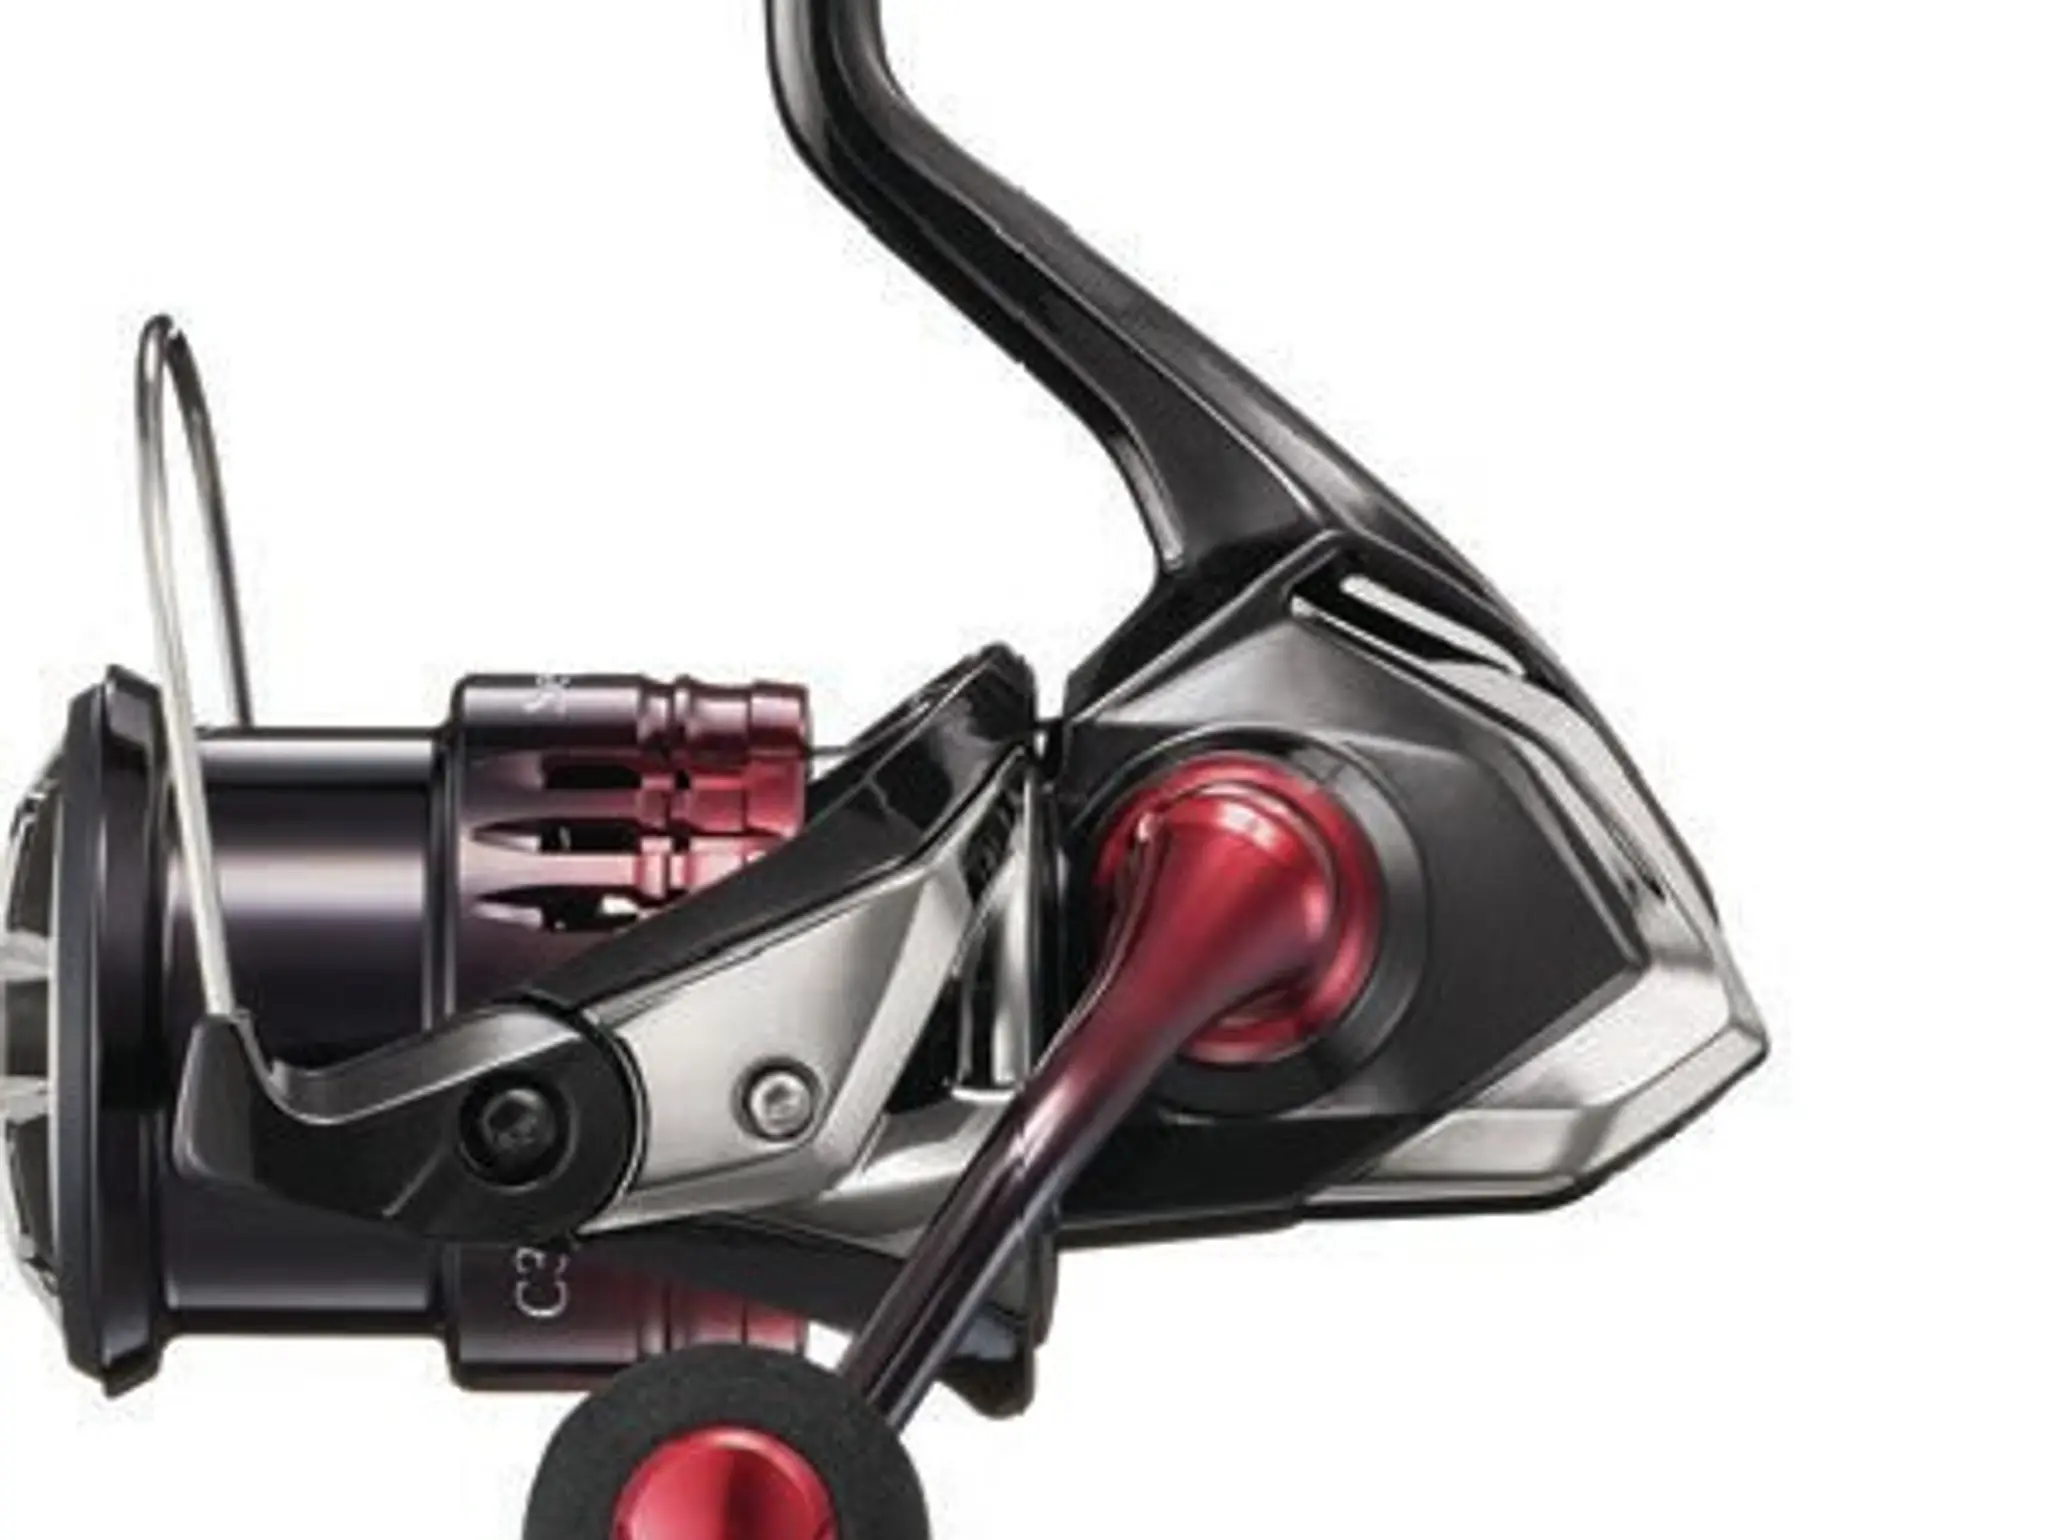 New Toys: Vetus Bow Pro Thruster range